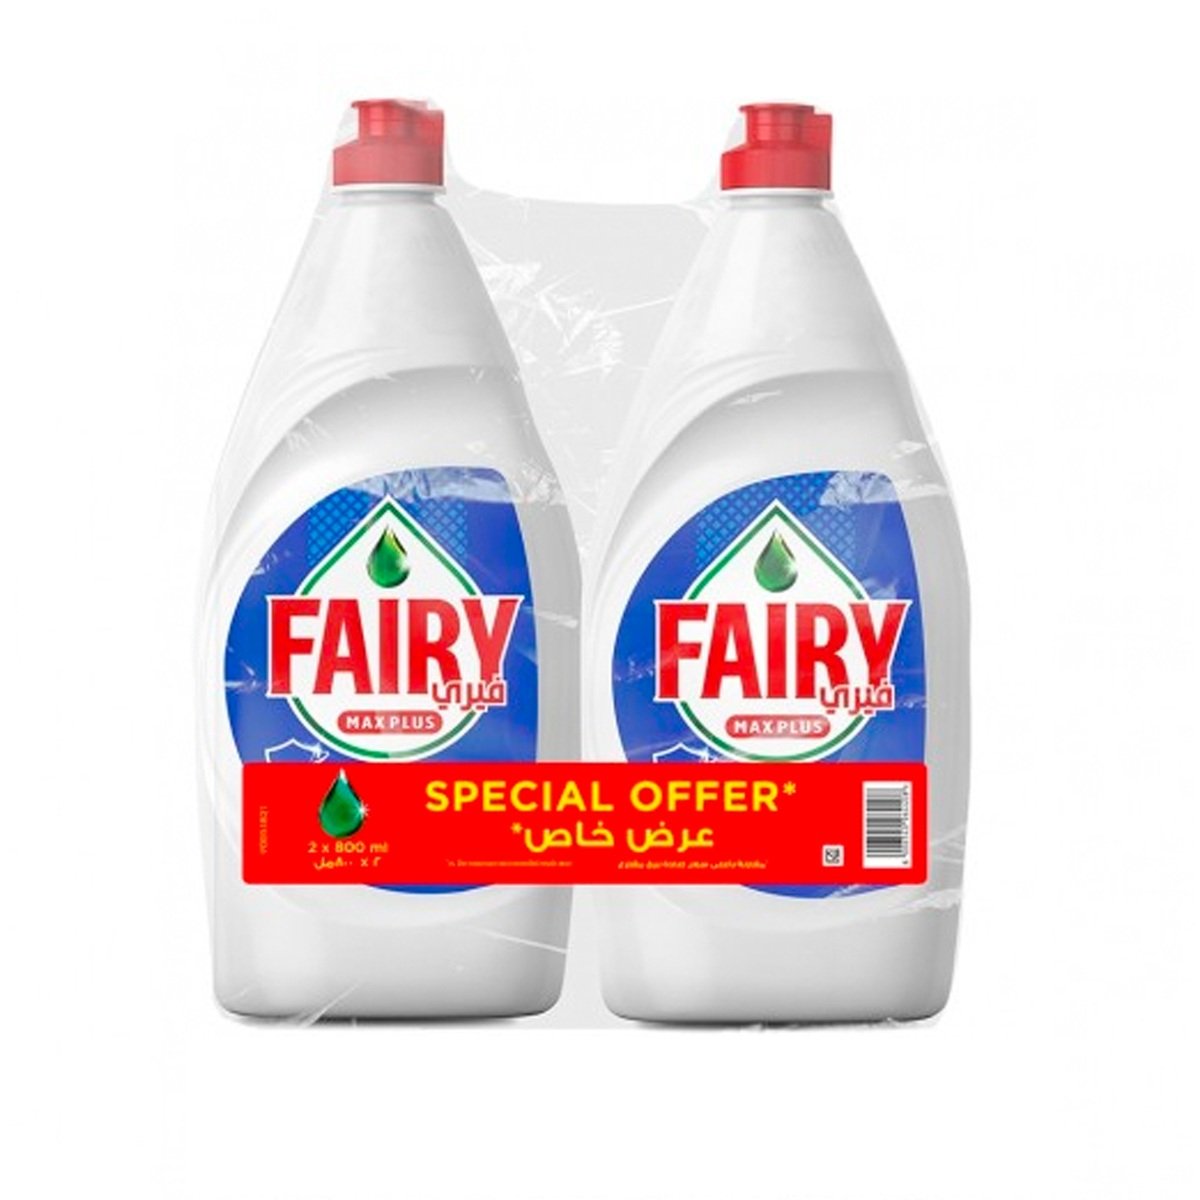 Fairy Max Plus Dishwashing Liquid Antibacterial 2 x 800 ml